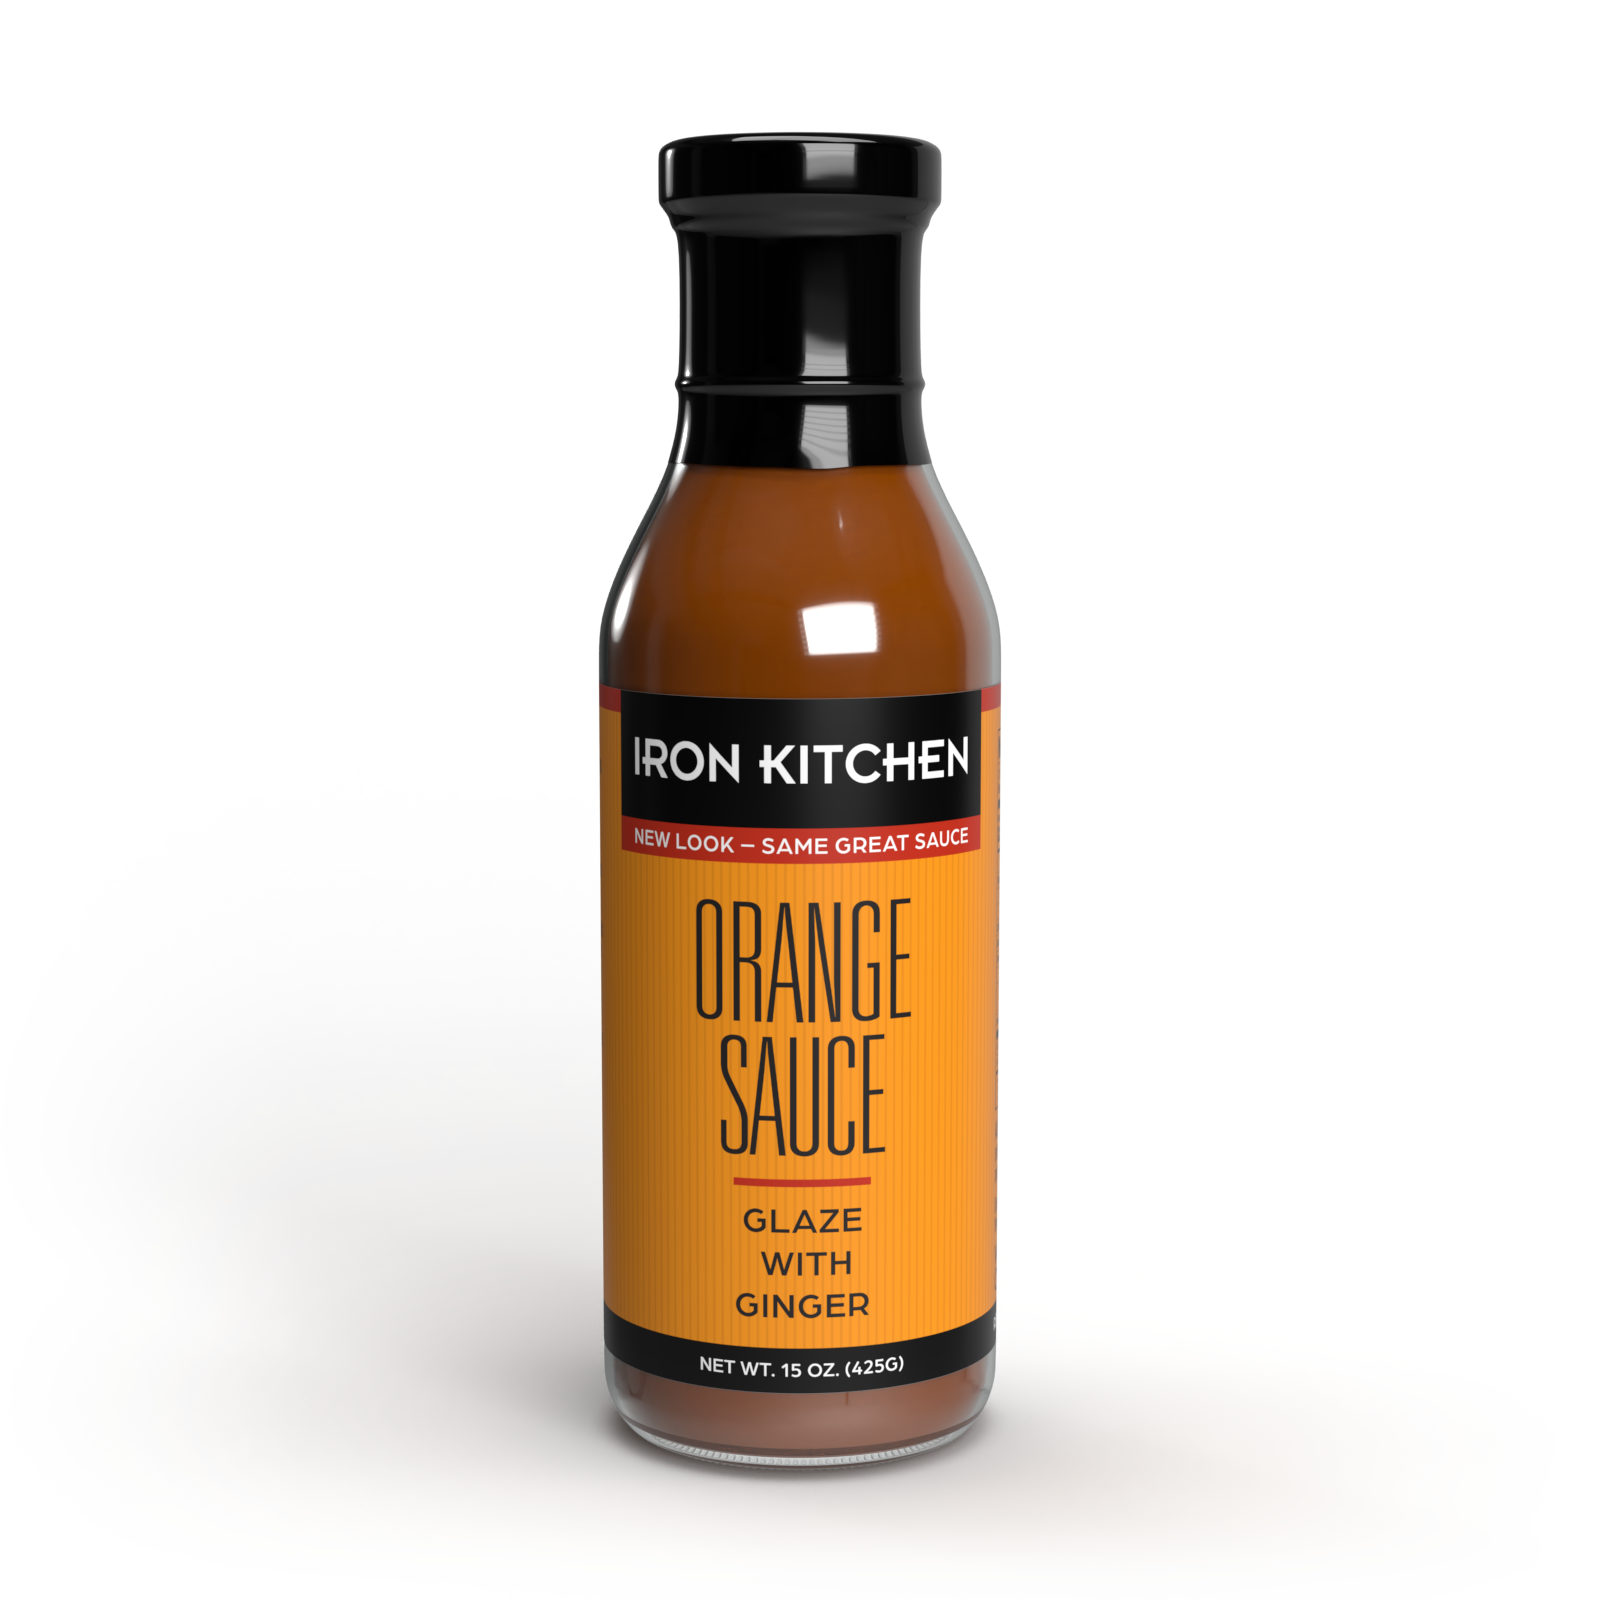 Iron Kitchen Orange Sauce with Ginger